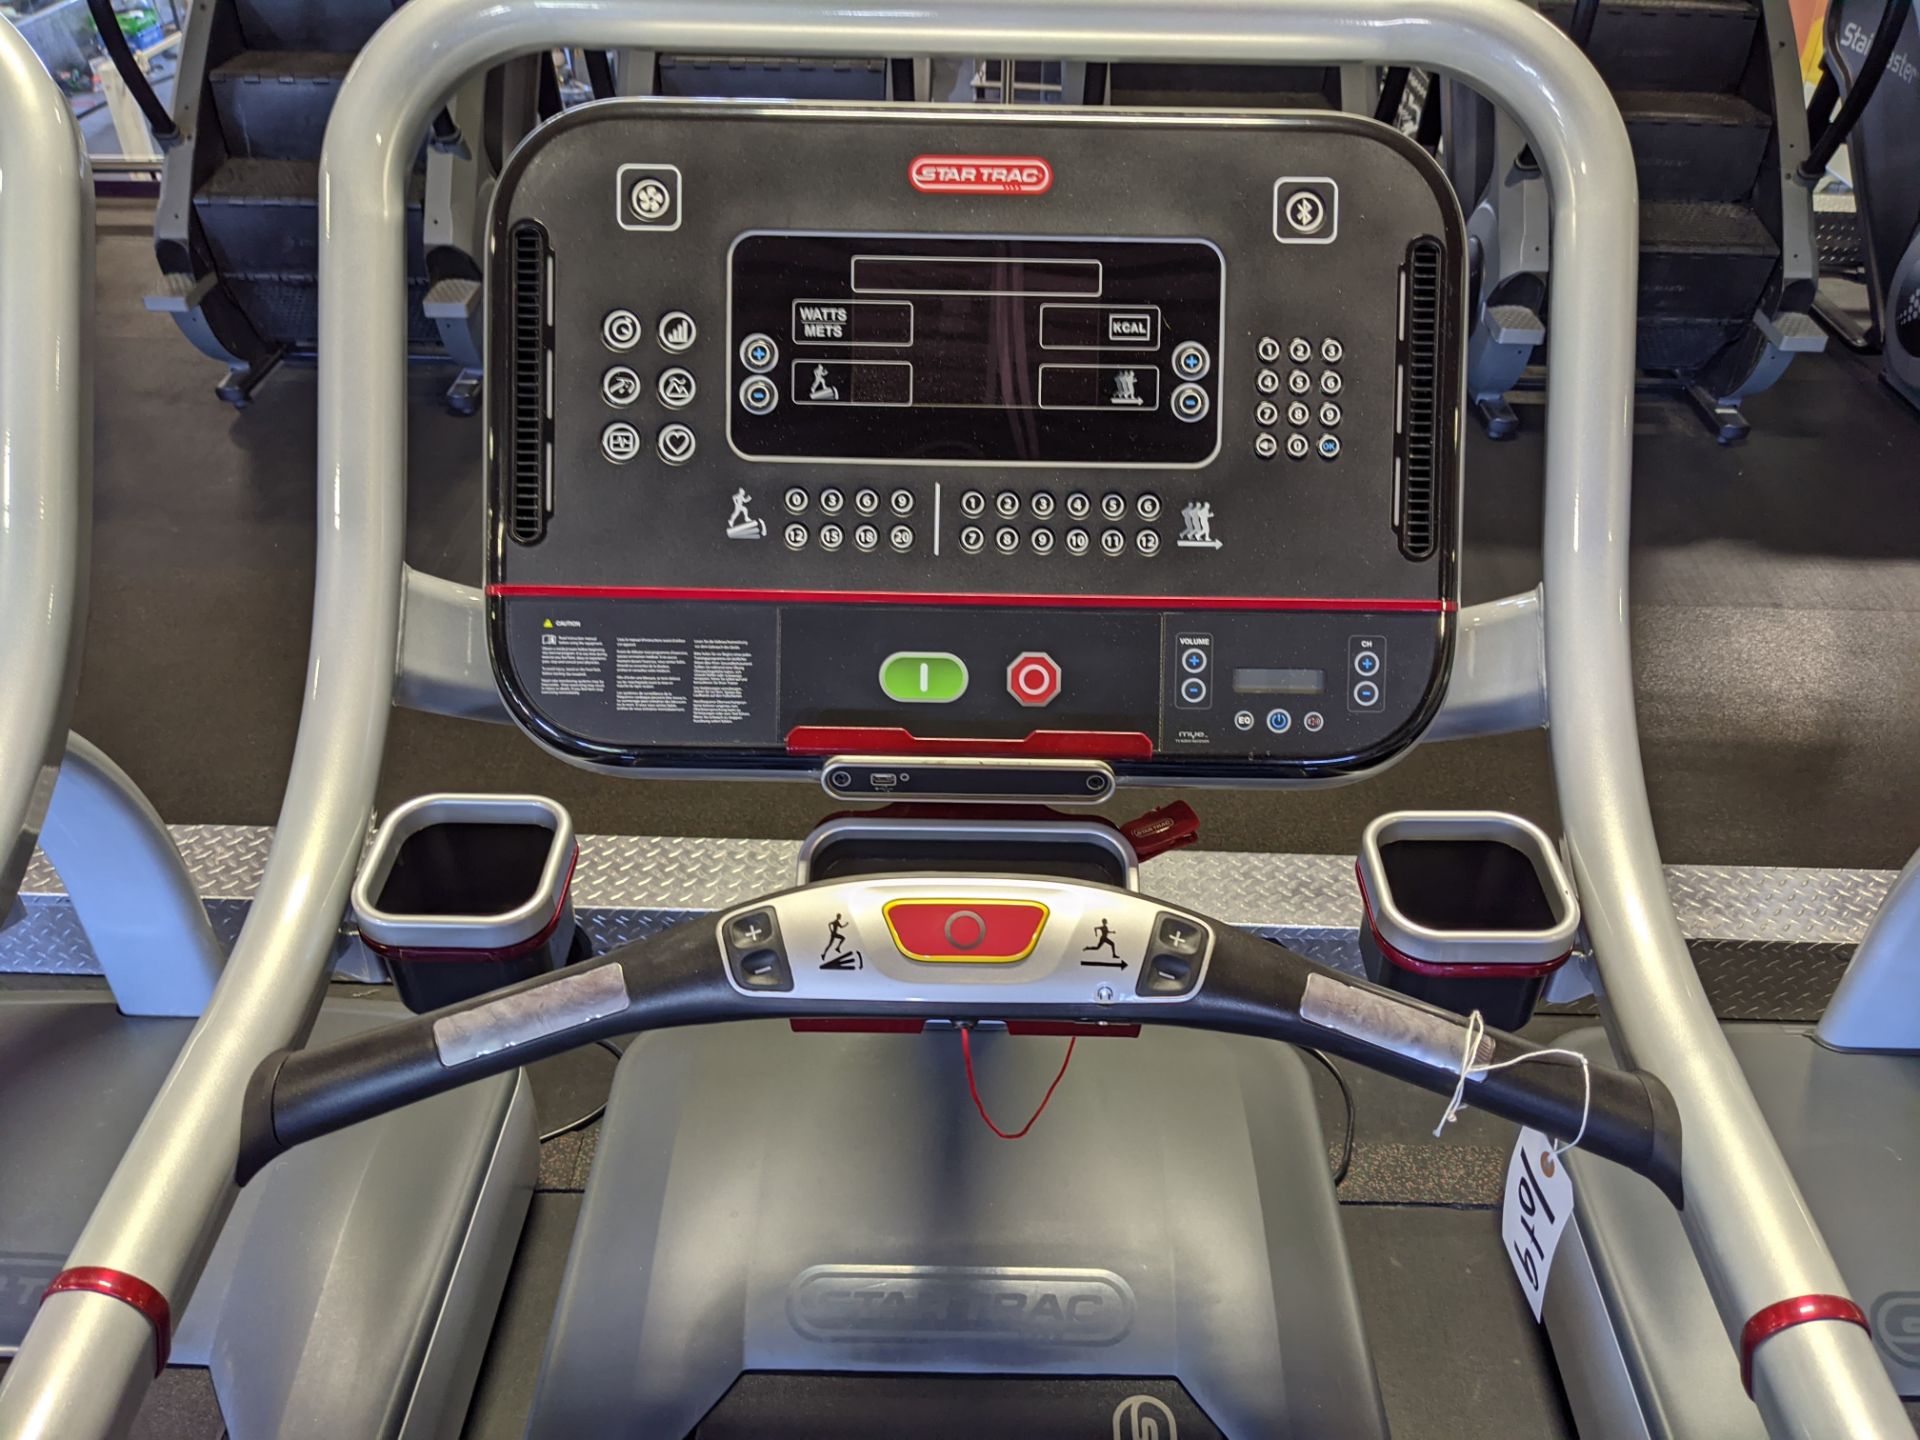 Star Trac Treadmill - Image 2 of 4